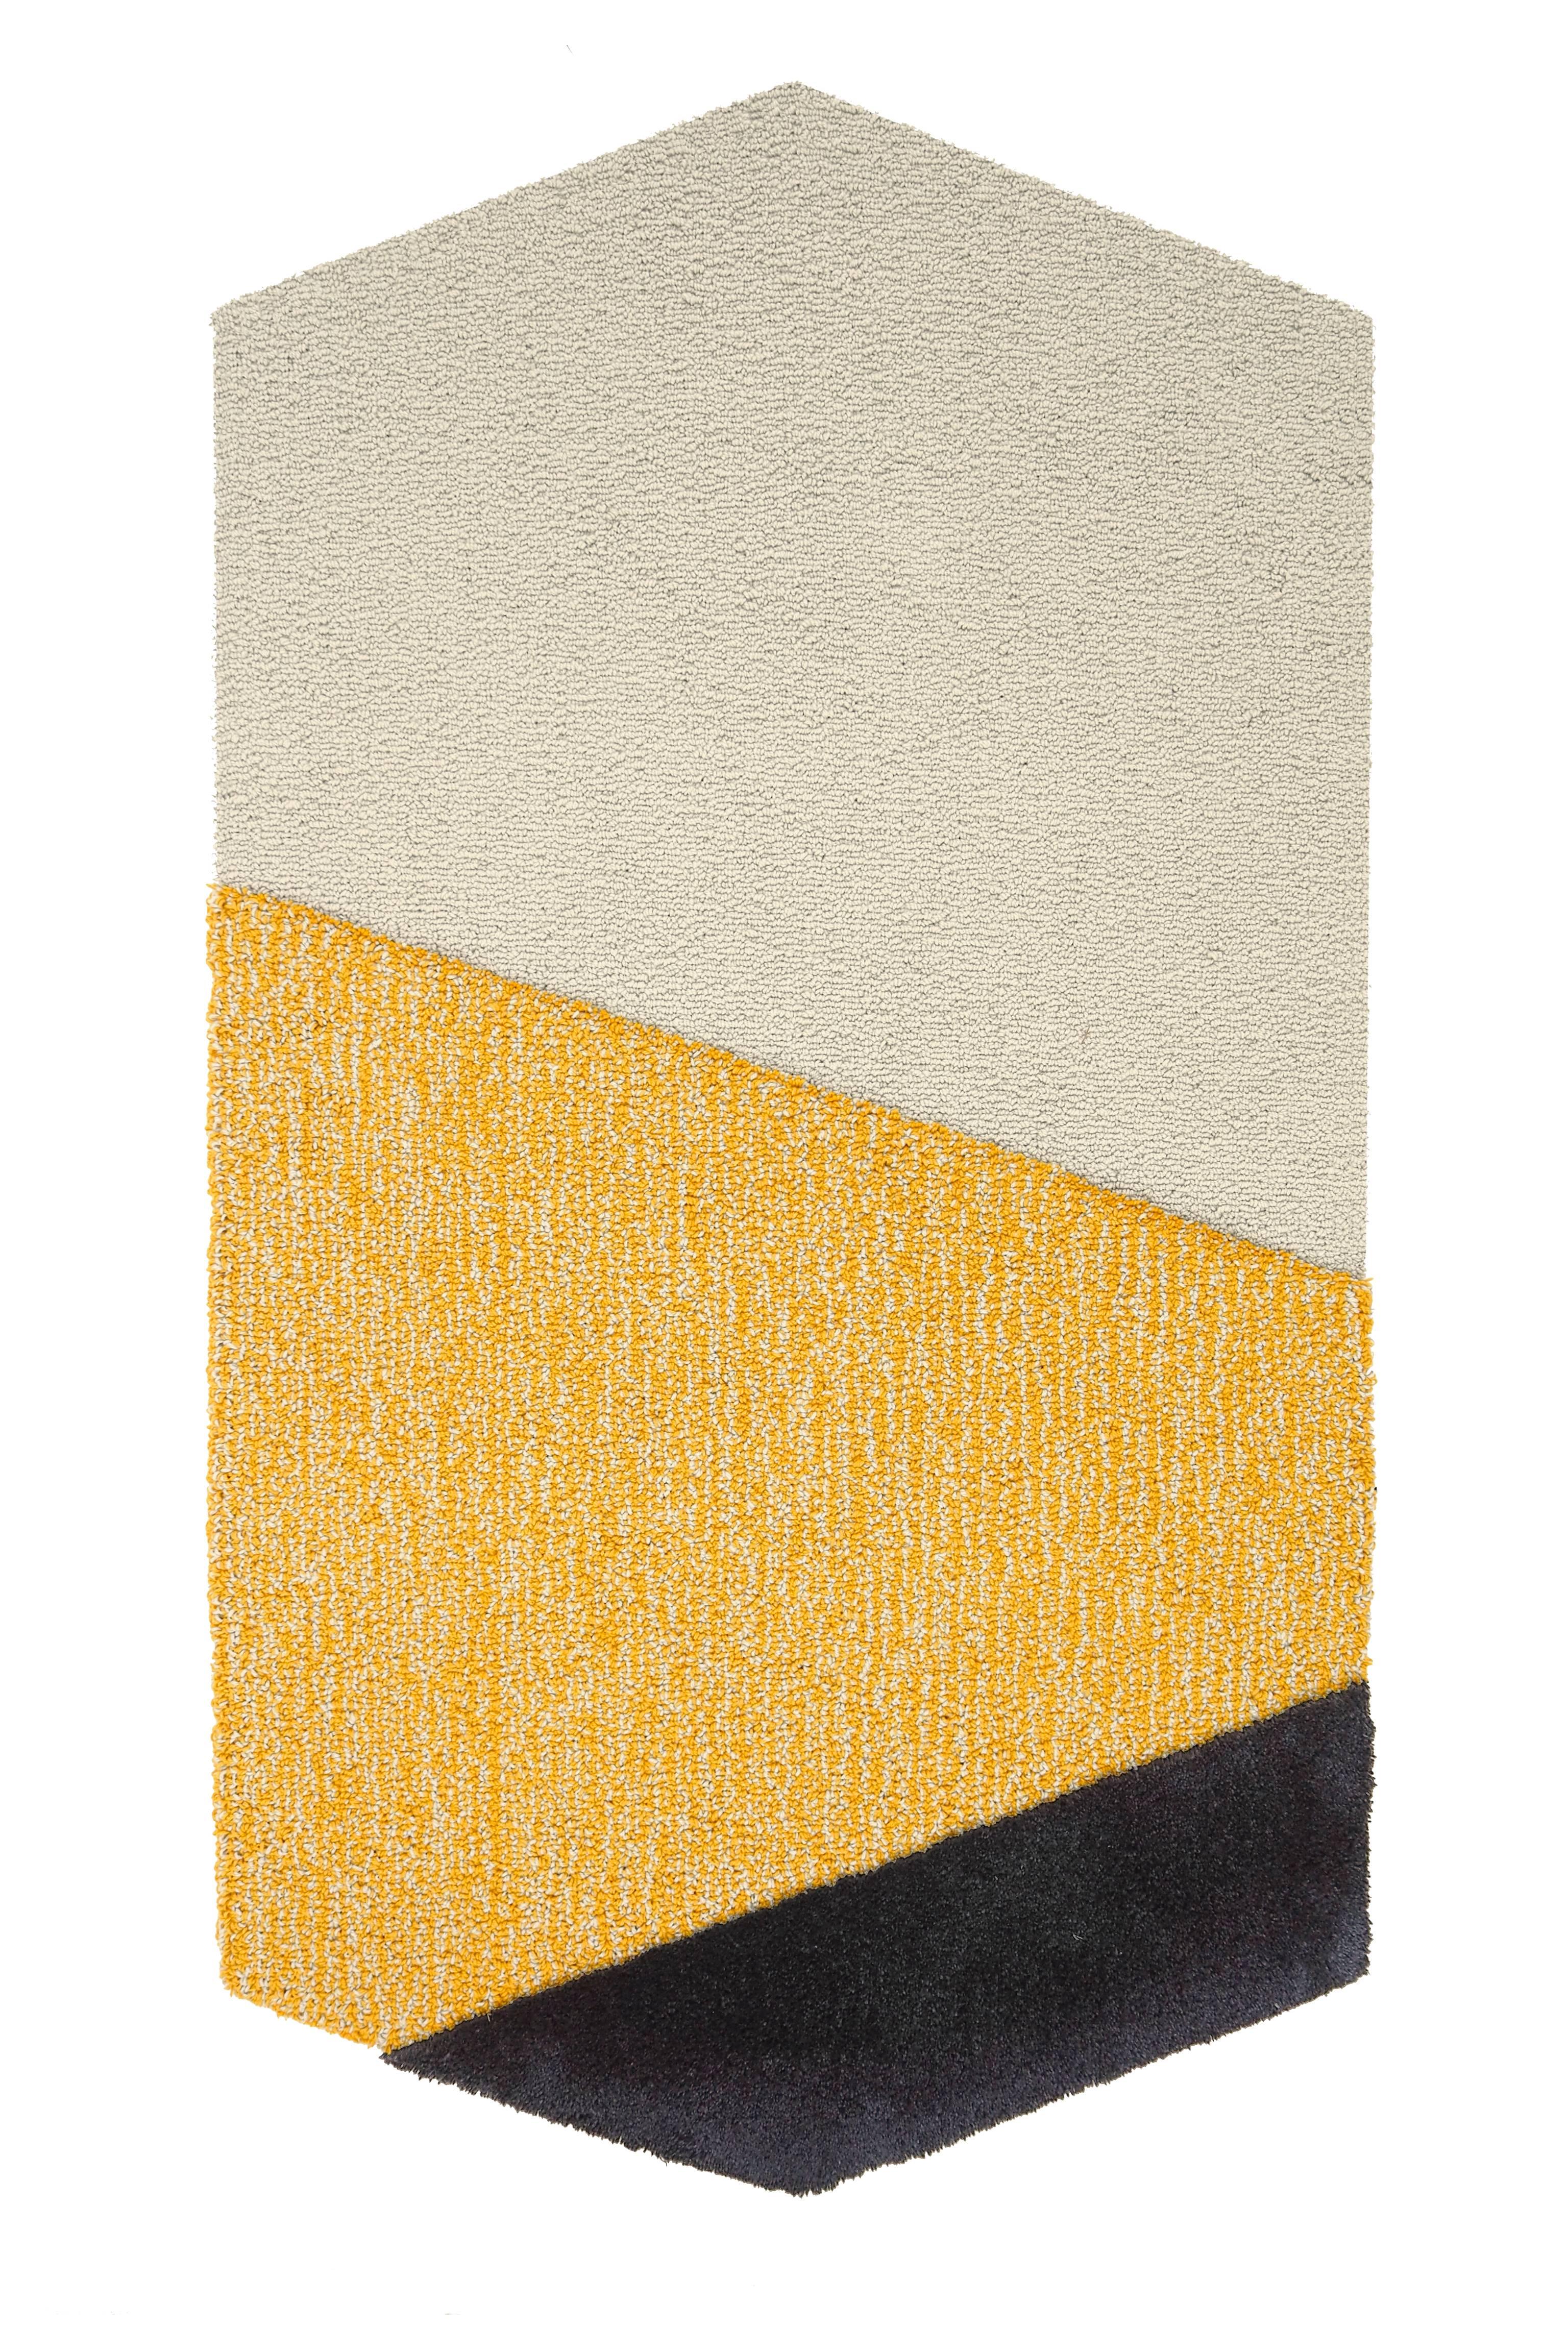 Contemporary Small Yellow Gray Oci Rug Triptych by Seraina Lareida For Sale